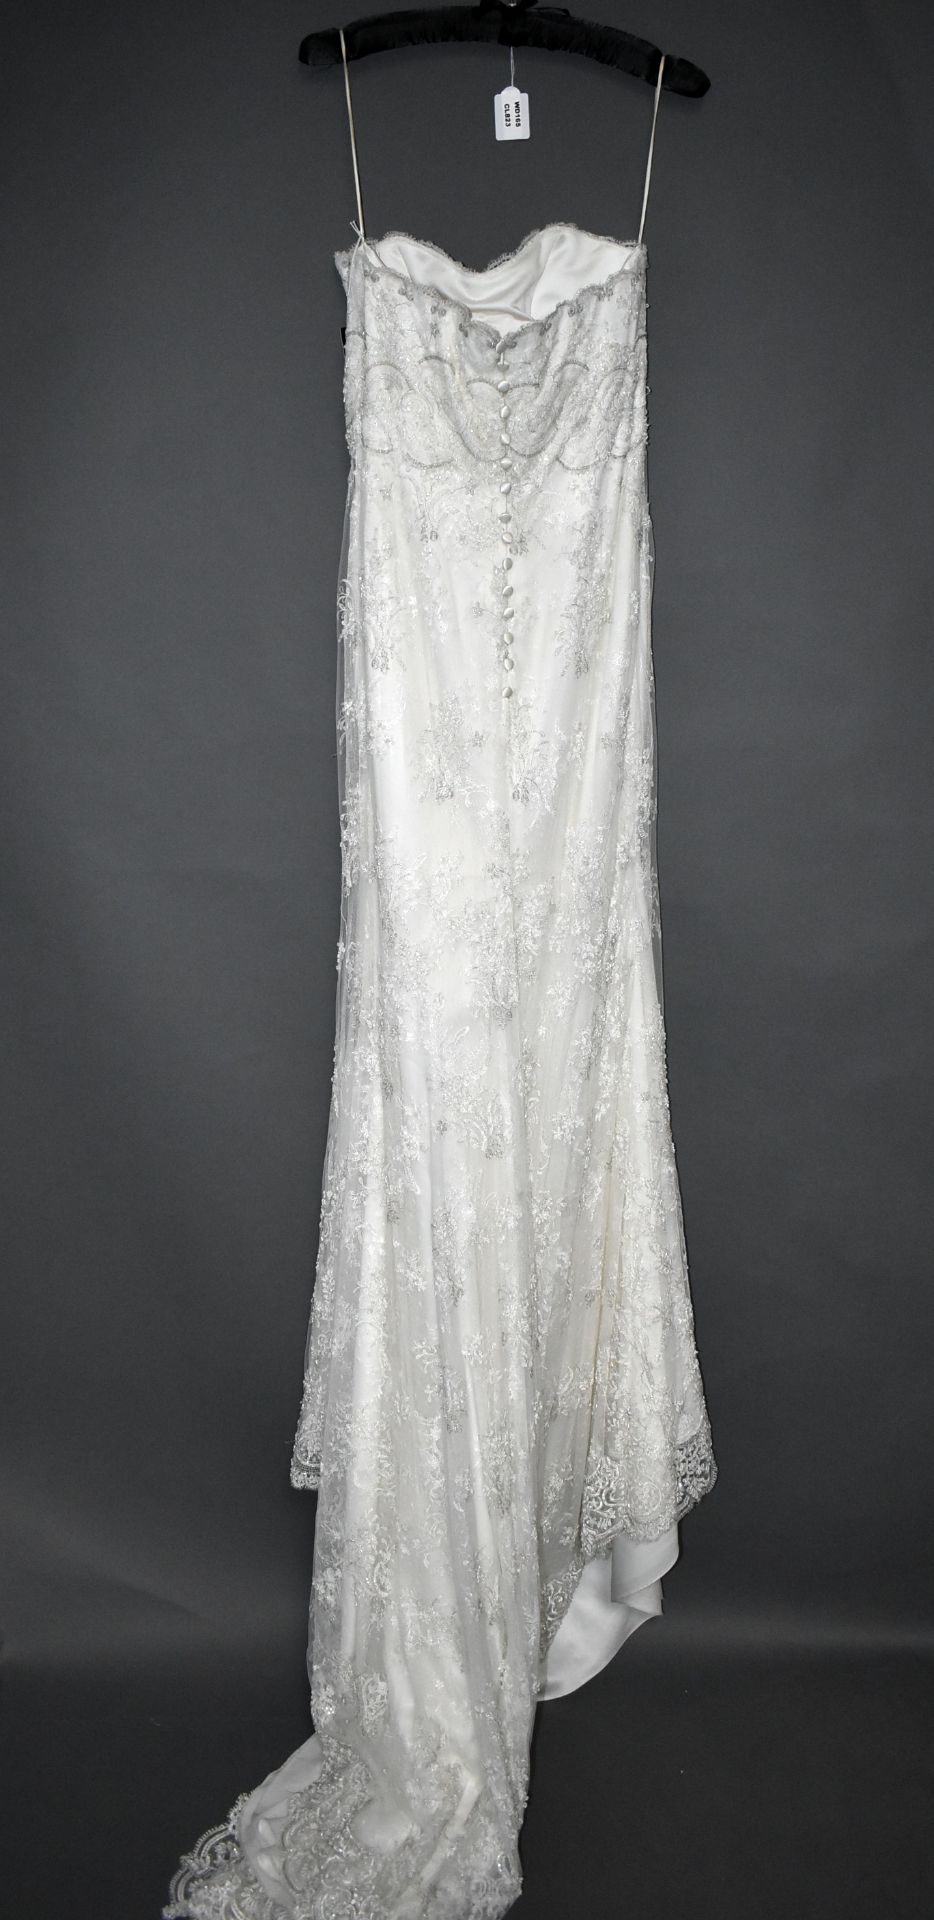 1 x LUSAN MANDONGUS Strapless Lace & Beaded Designer Wedding Dress Bridal Gown RRP £2,250 UK 12 - Image 3 of 5